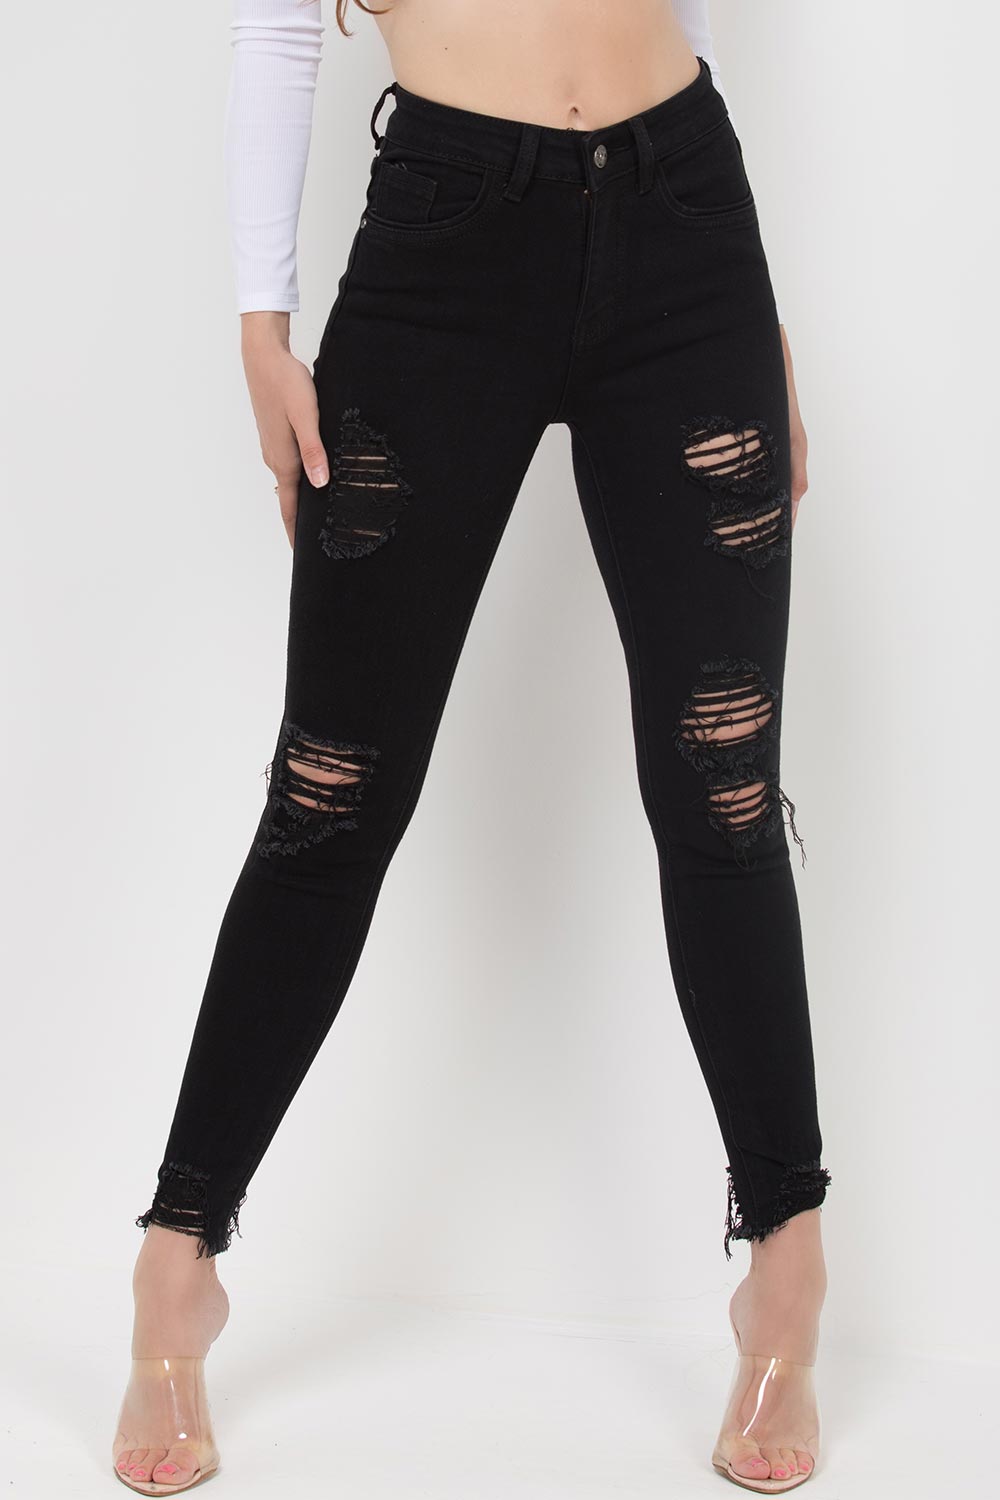 gentage kuffert Scorch Women's Black Ripped Jeans High Waisted – Styledup.co.uk